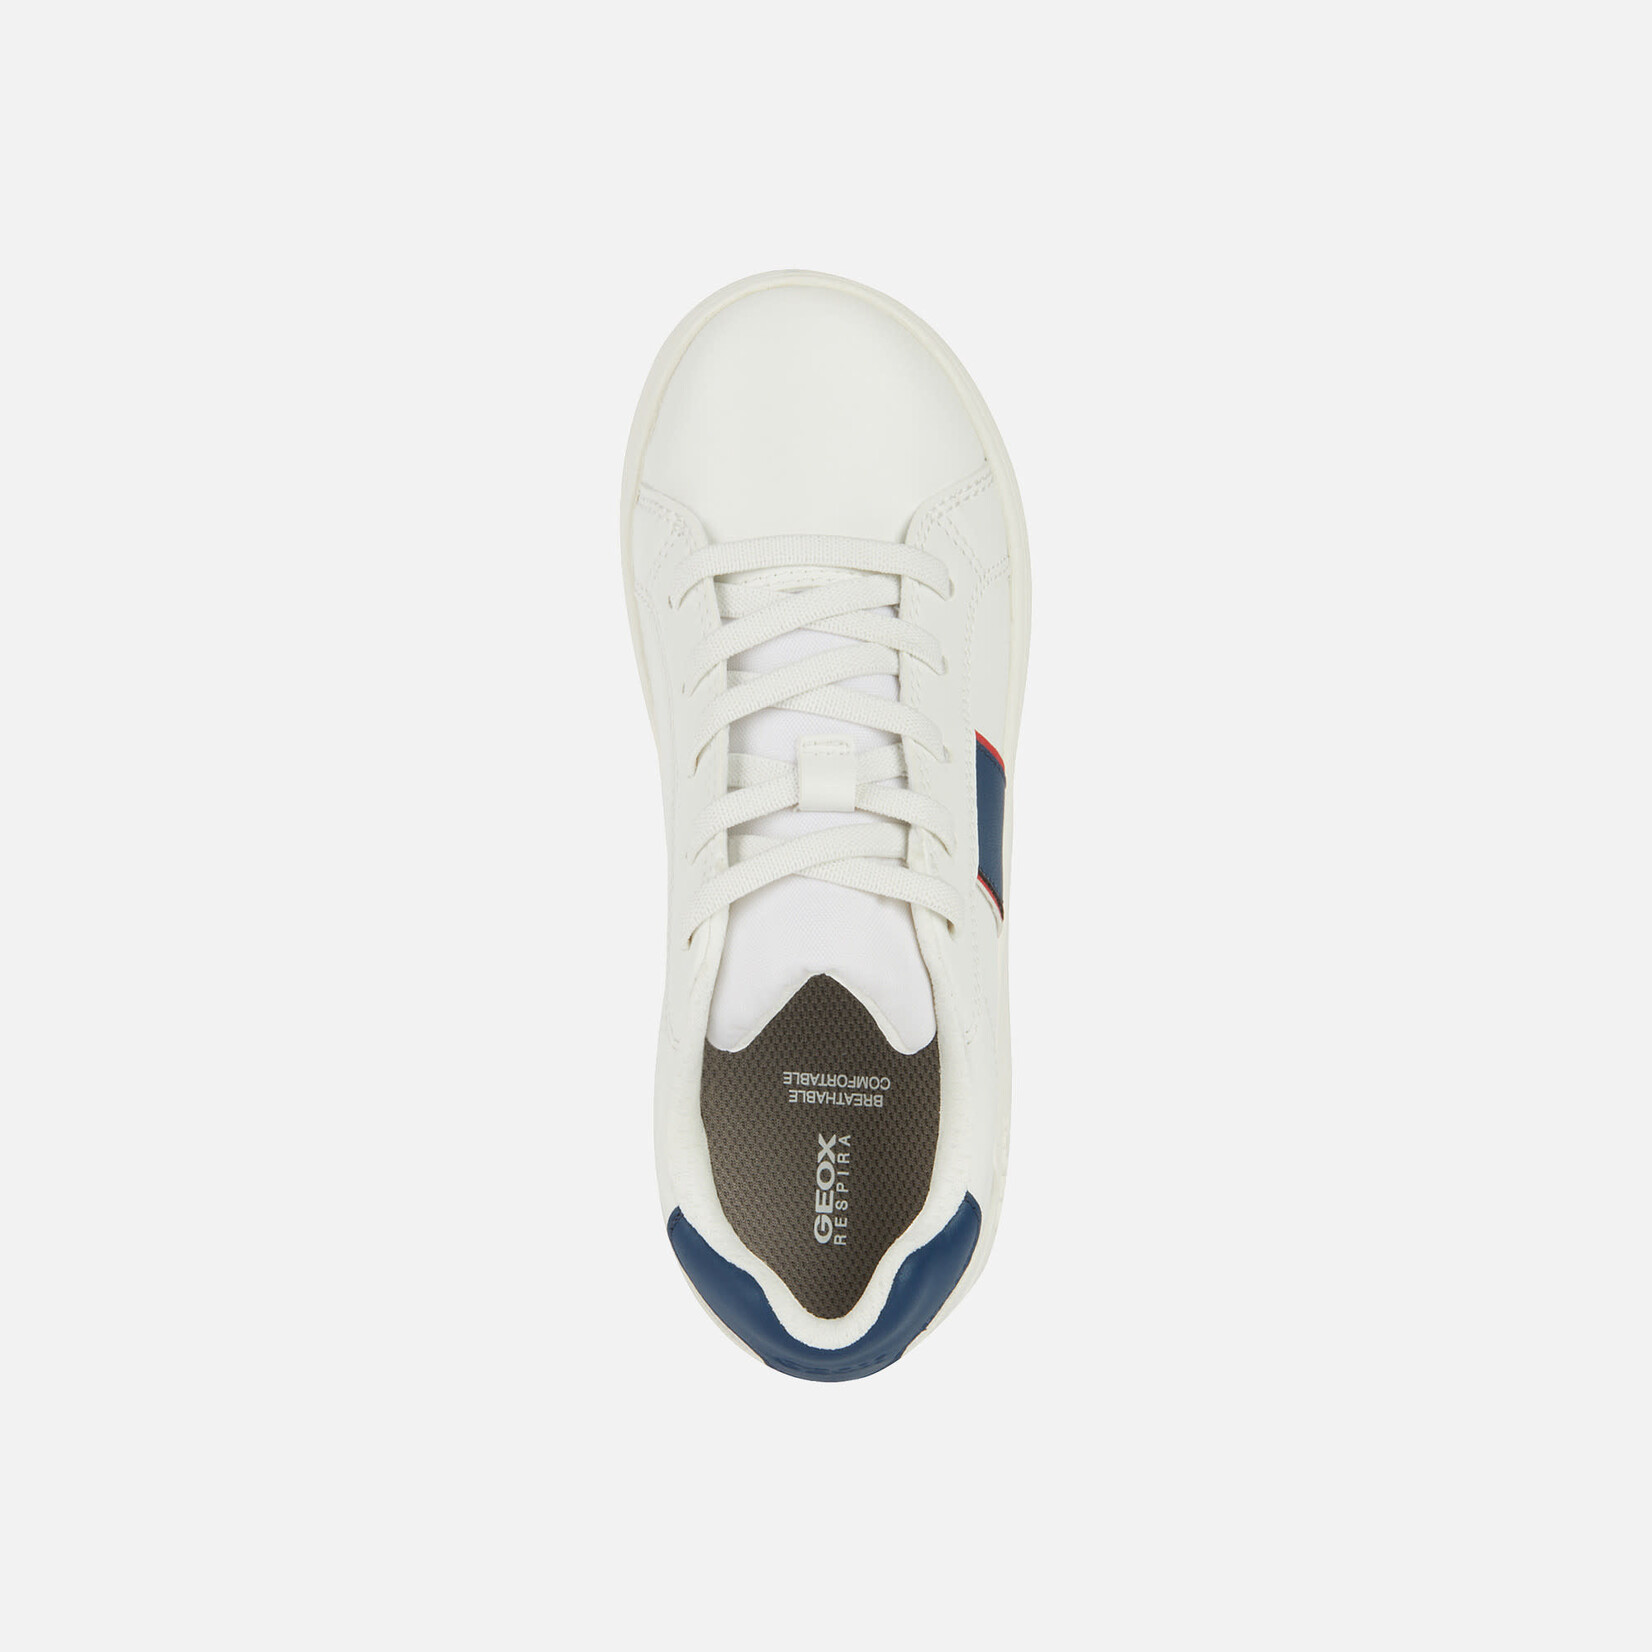 Geox GEOX - Chaussures blanches de cuir synthétique 'Eclyper - Blanc/Bleu marine'